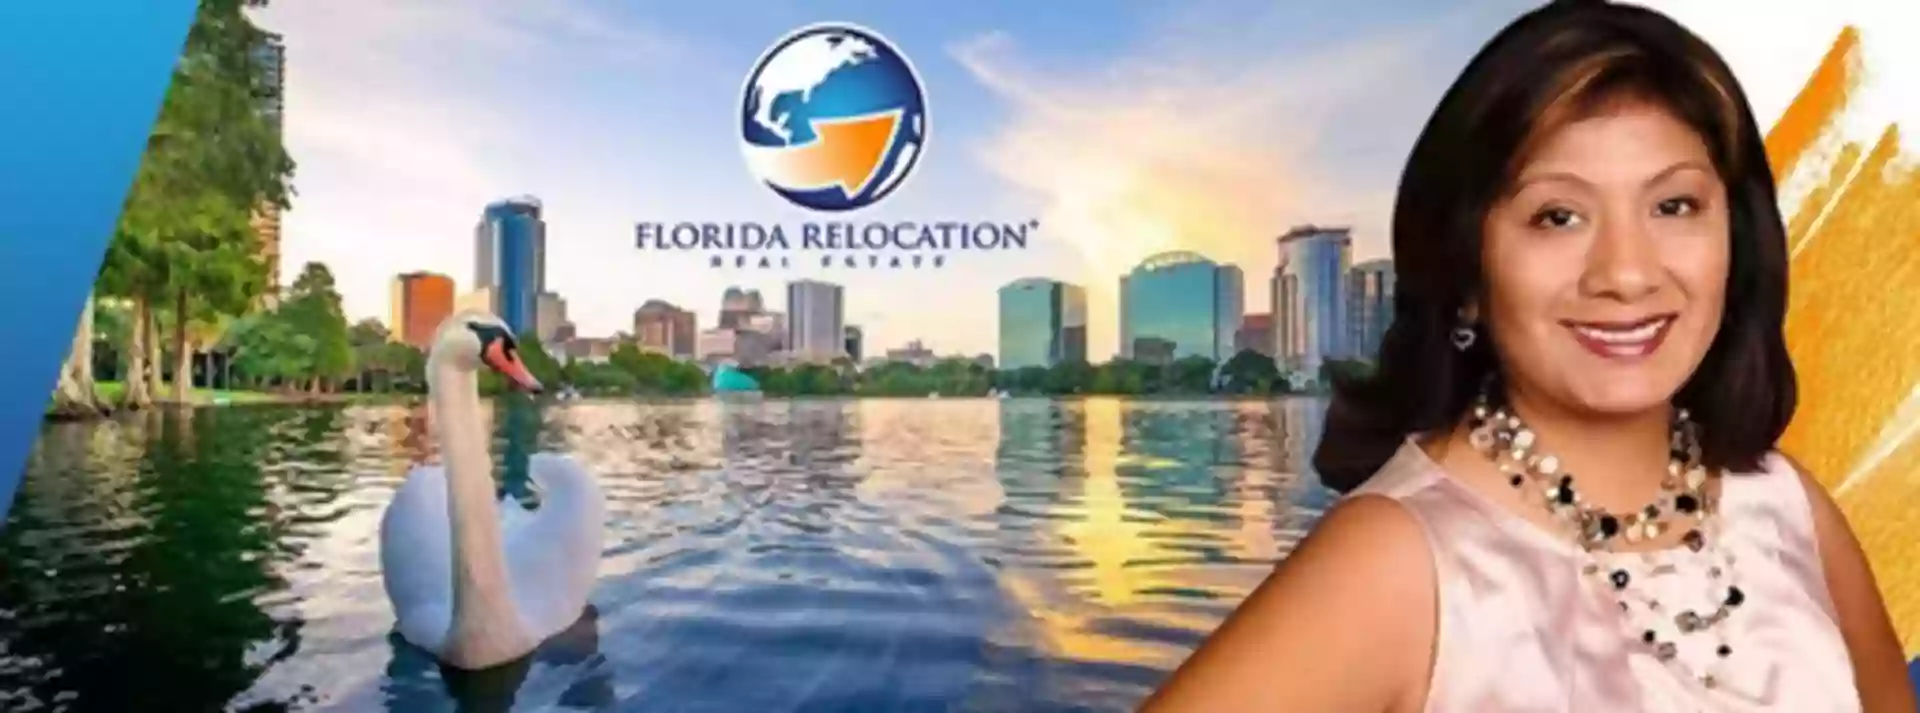 Florida Relocation Real Estate in Orlando